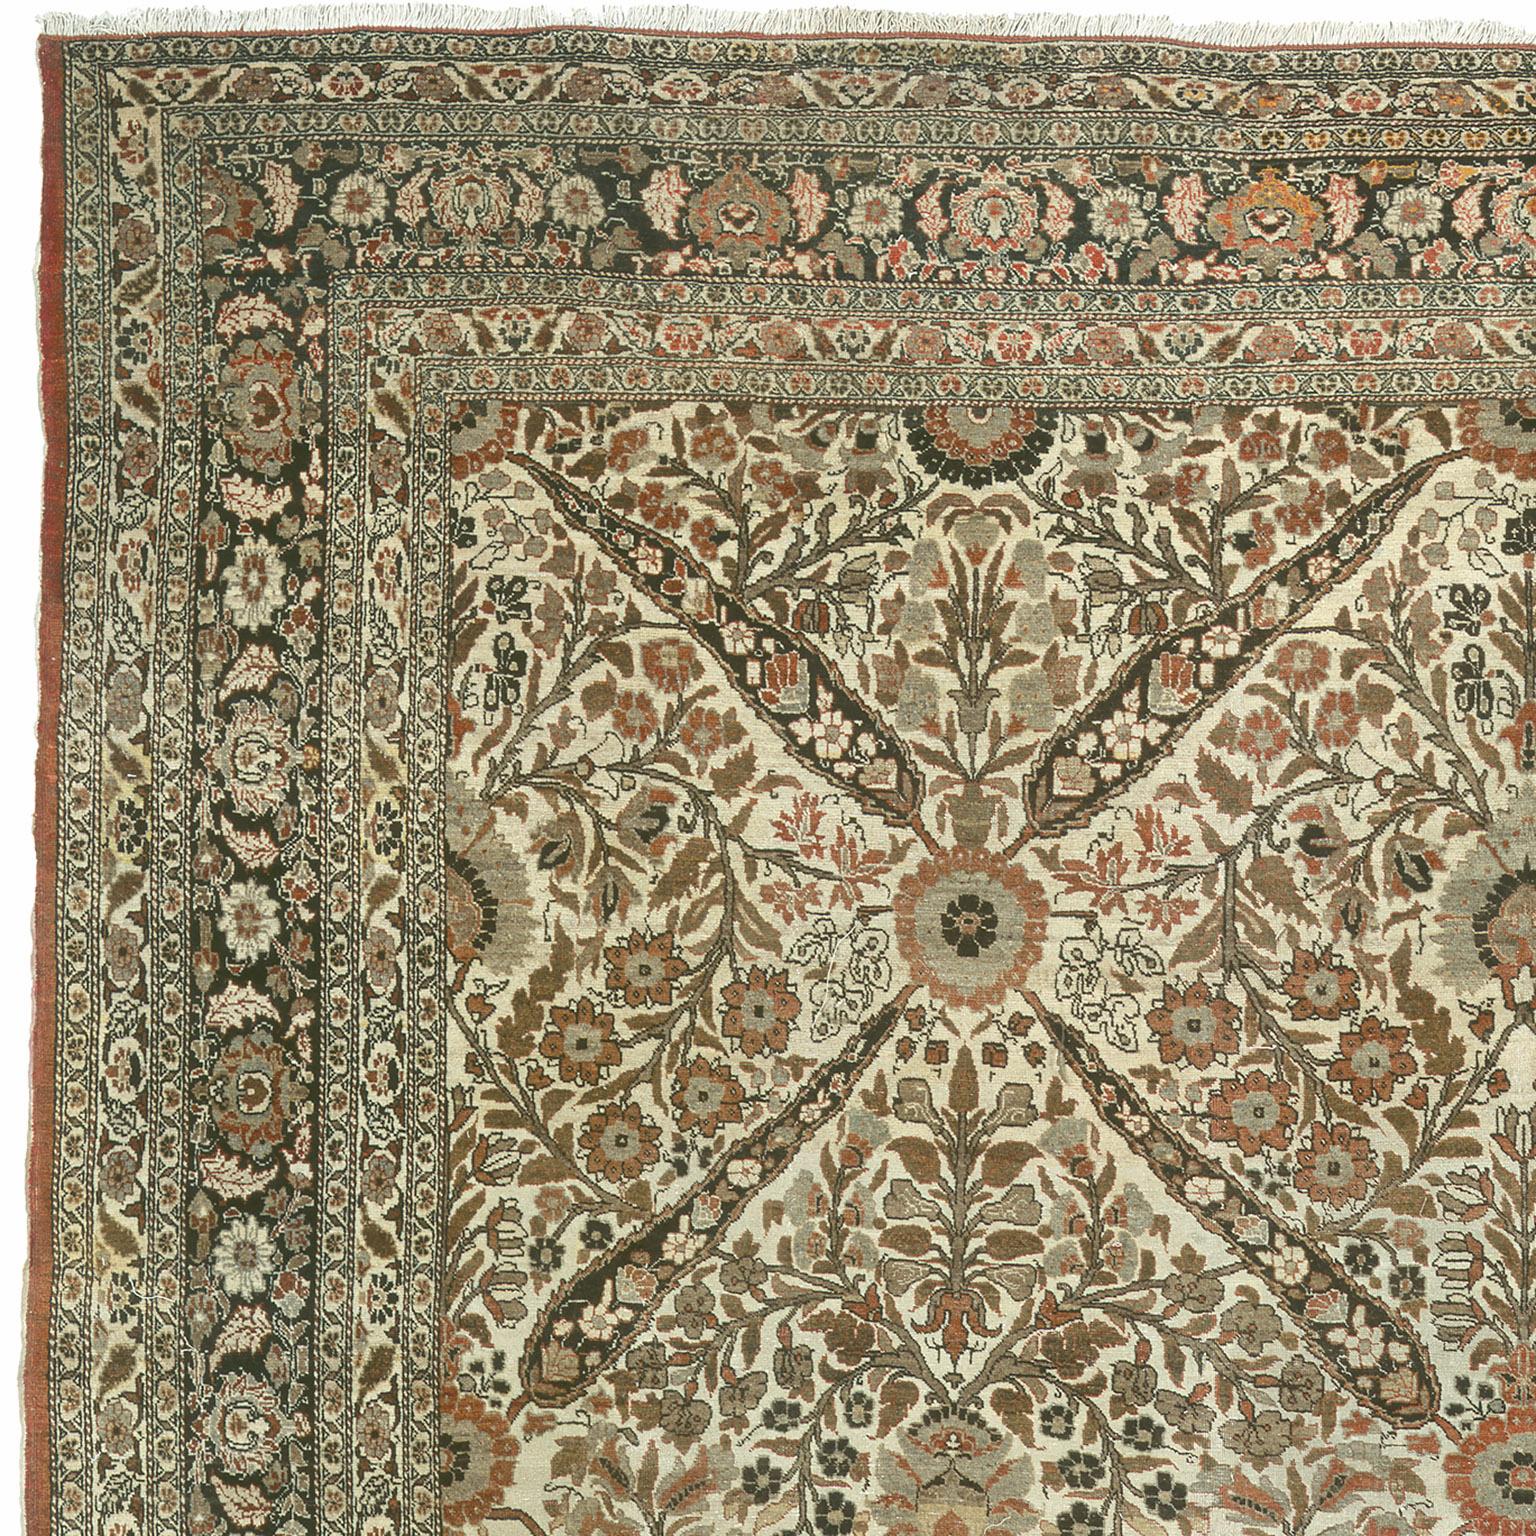 Persia, ca. 1890
Measures: 15'9